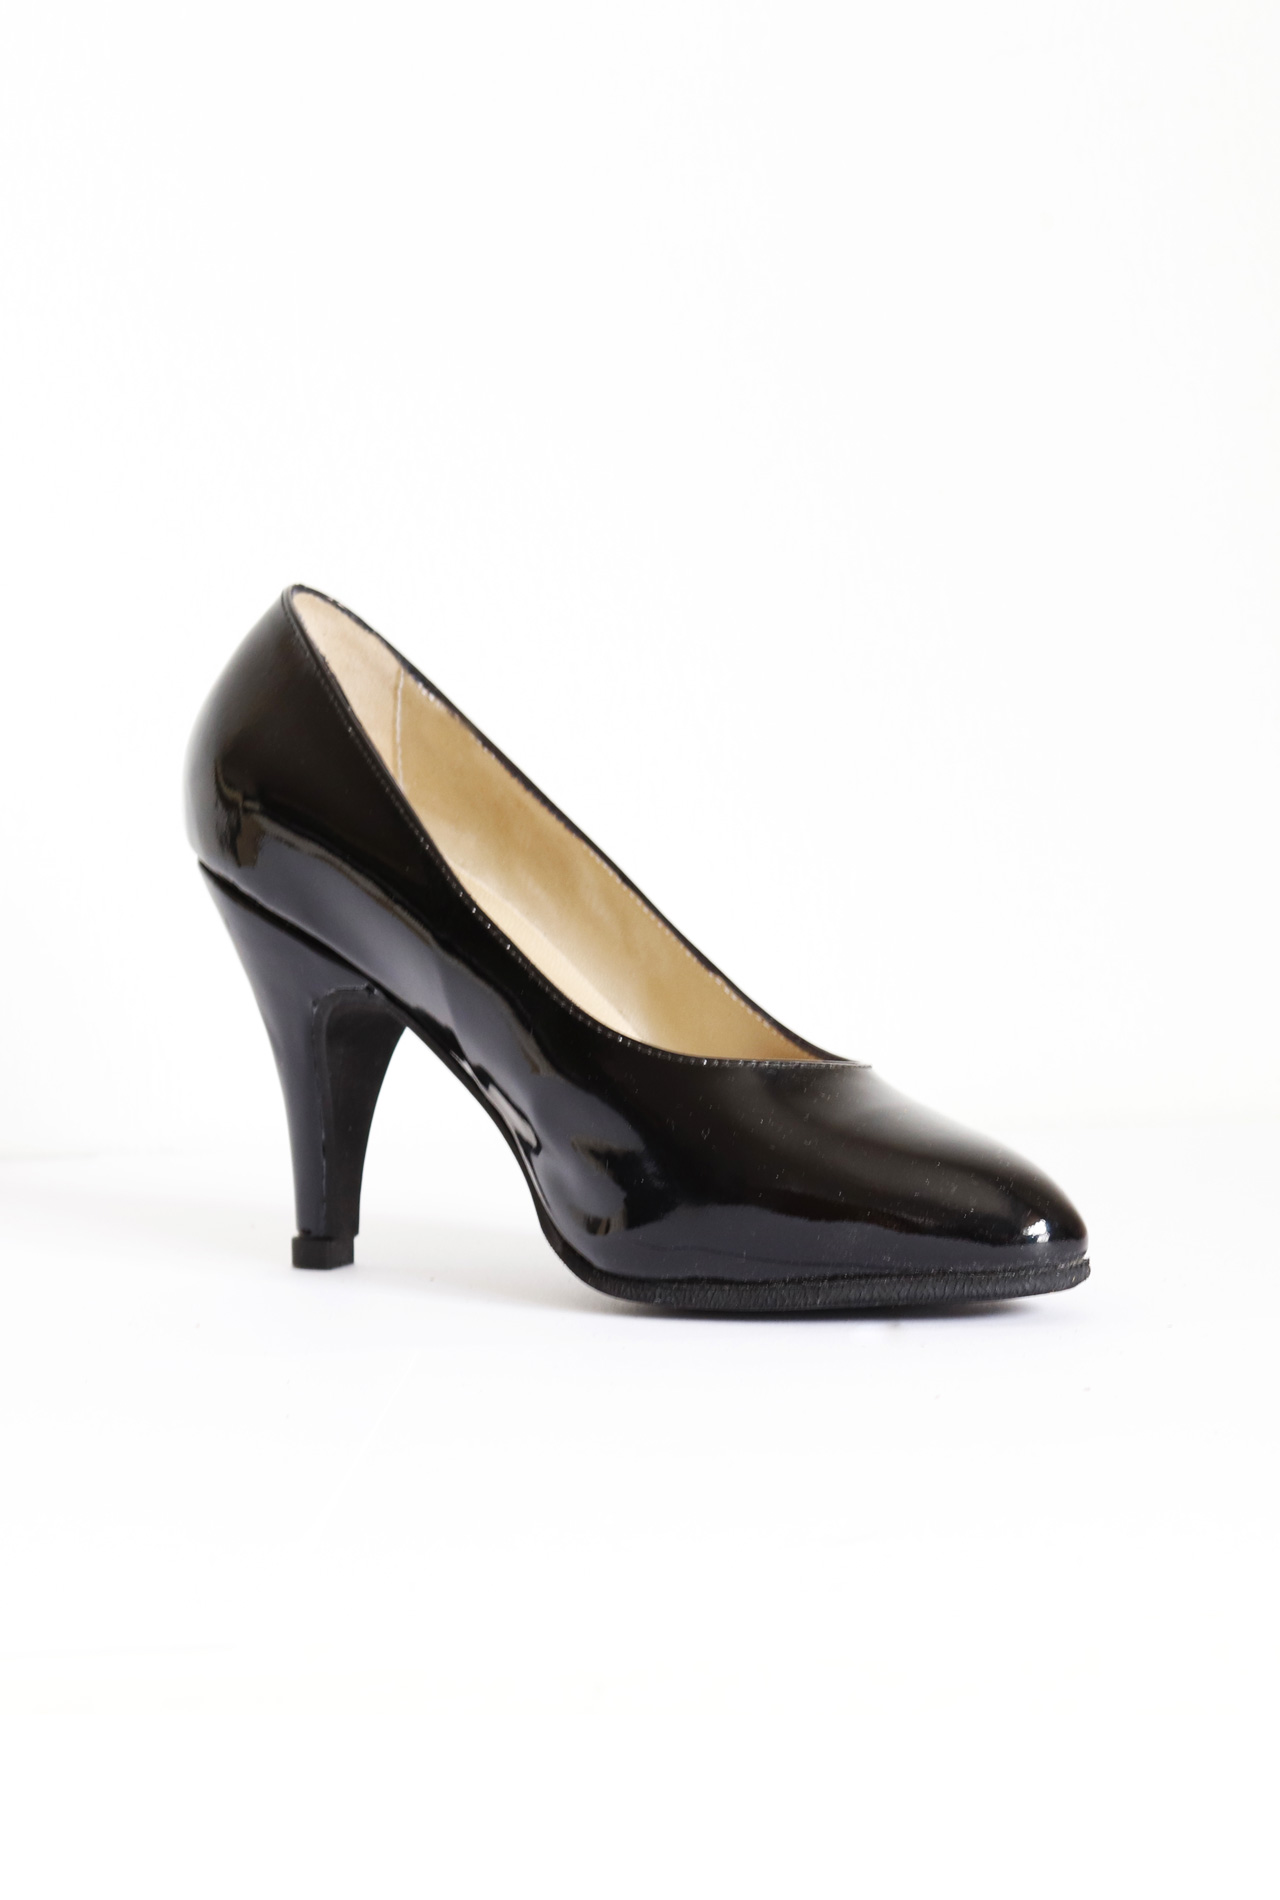 black patent leather stilettos